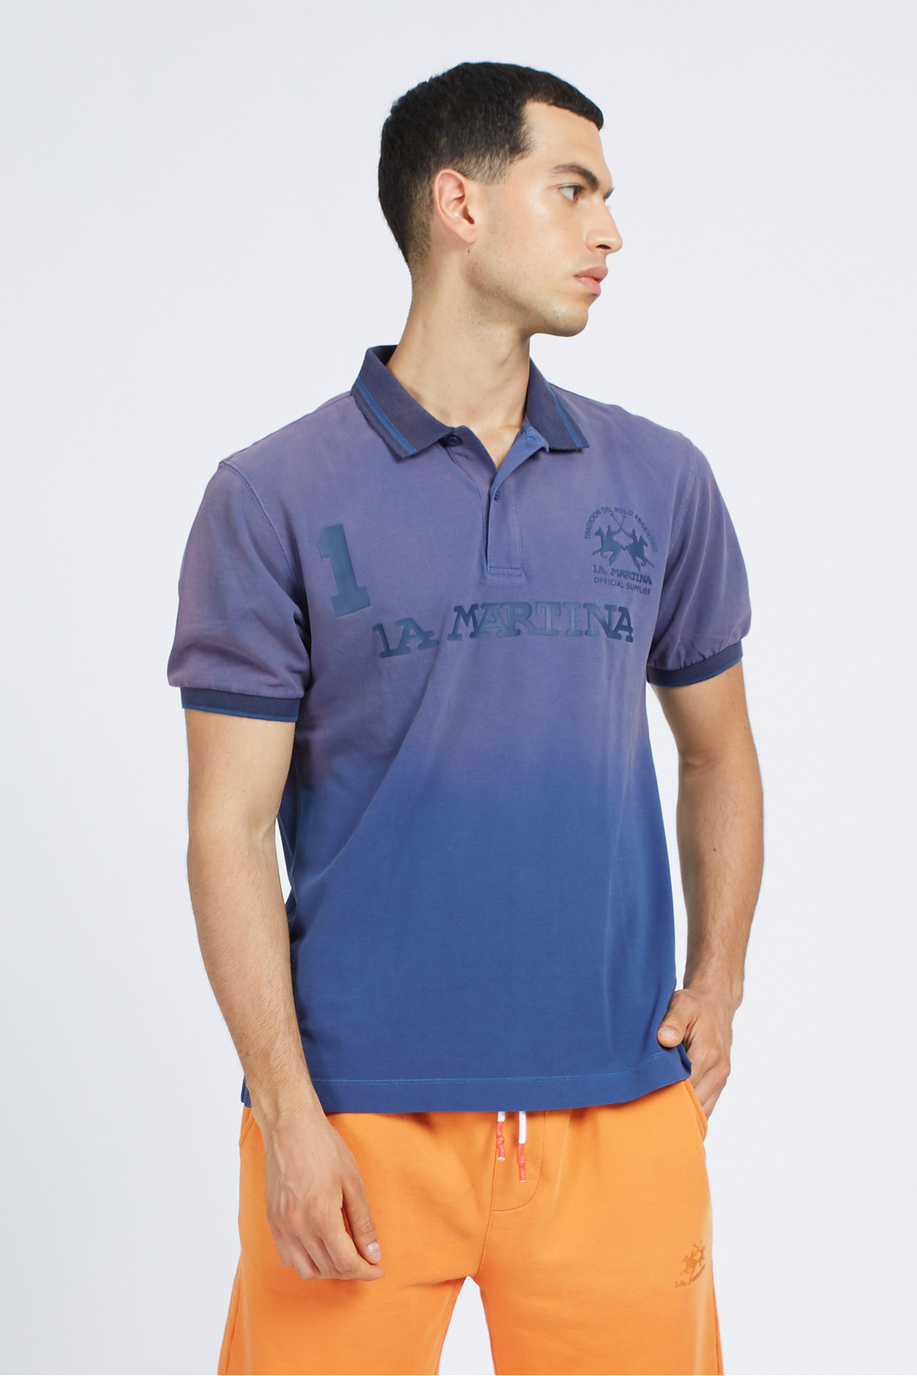 Regular Fit Kurzarm-Poloshirt aus 100 % Baumwolle für Herren - Vilko - Poloshirts | La Martina - Official Online Shop